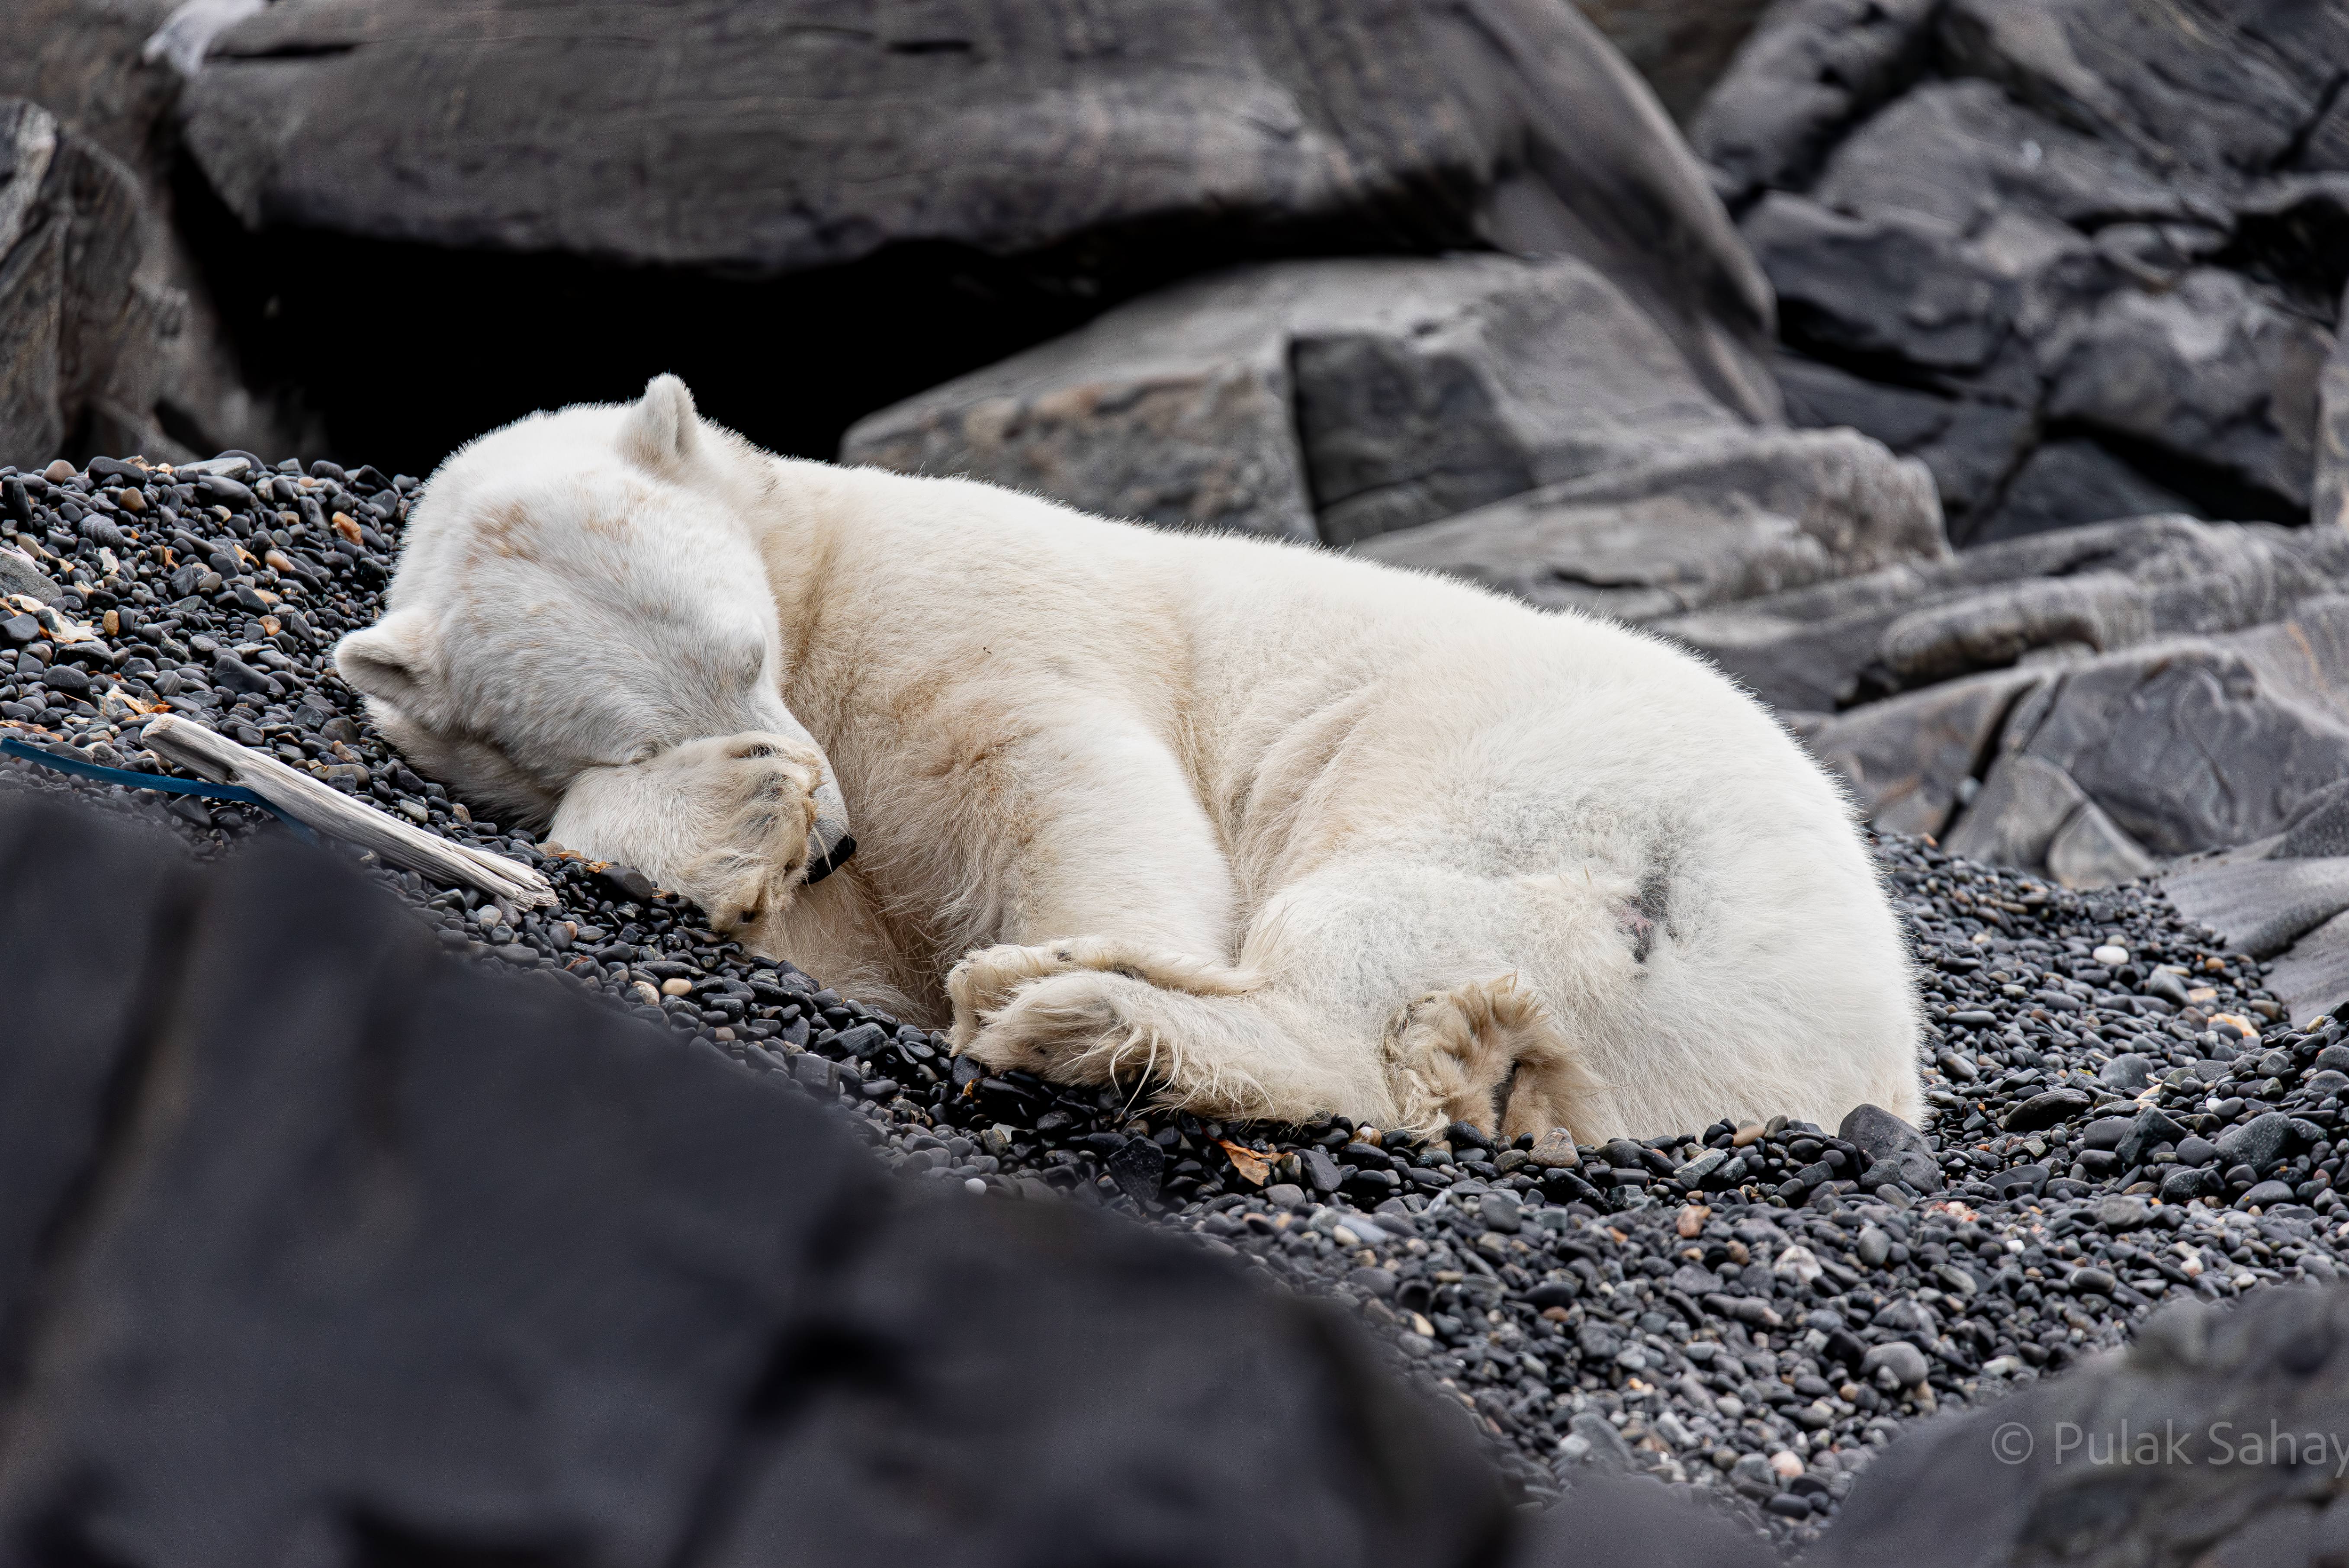 Polar bear sleeping under the cover of paw